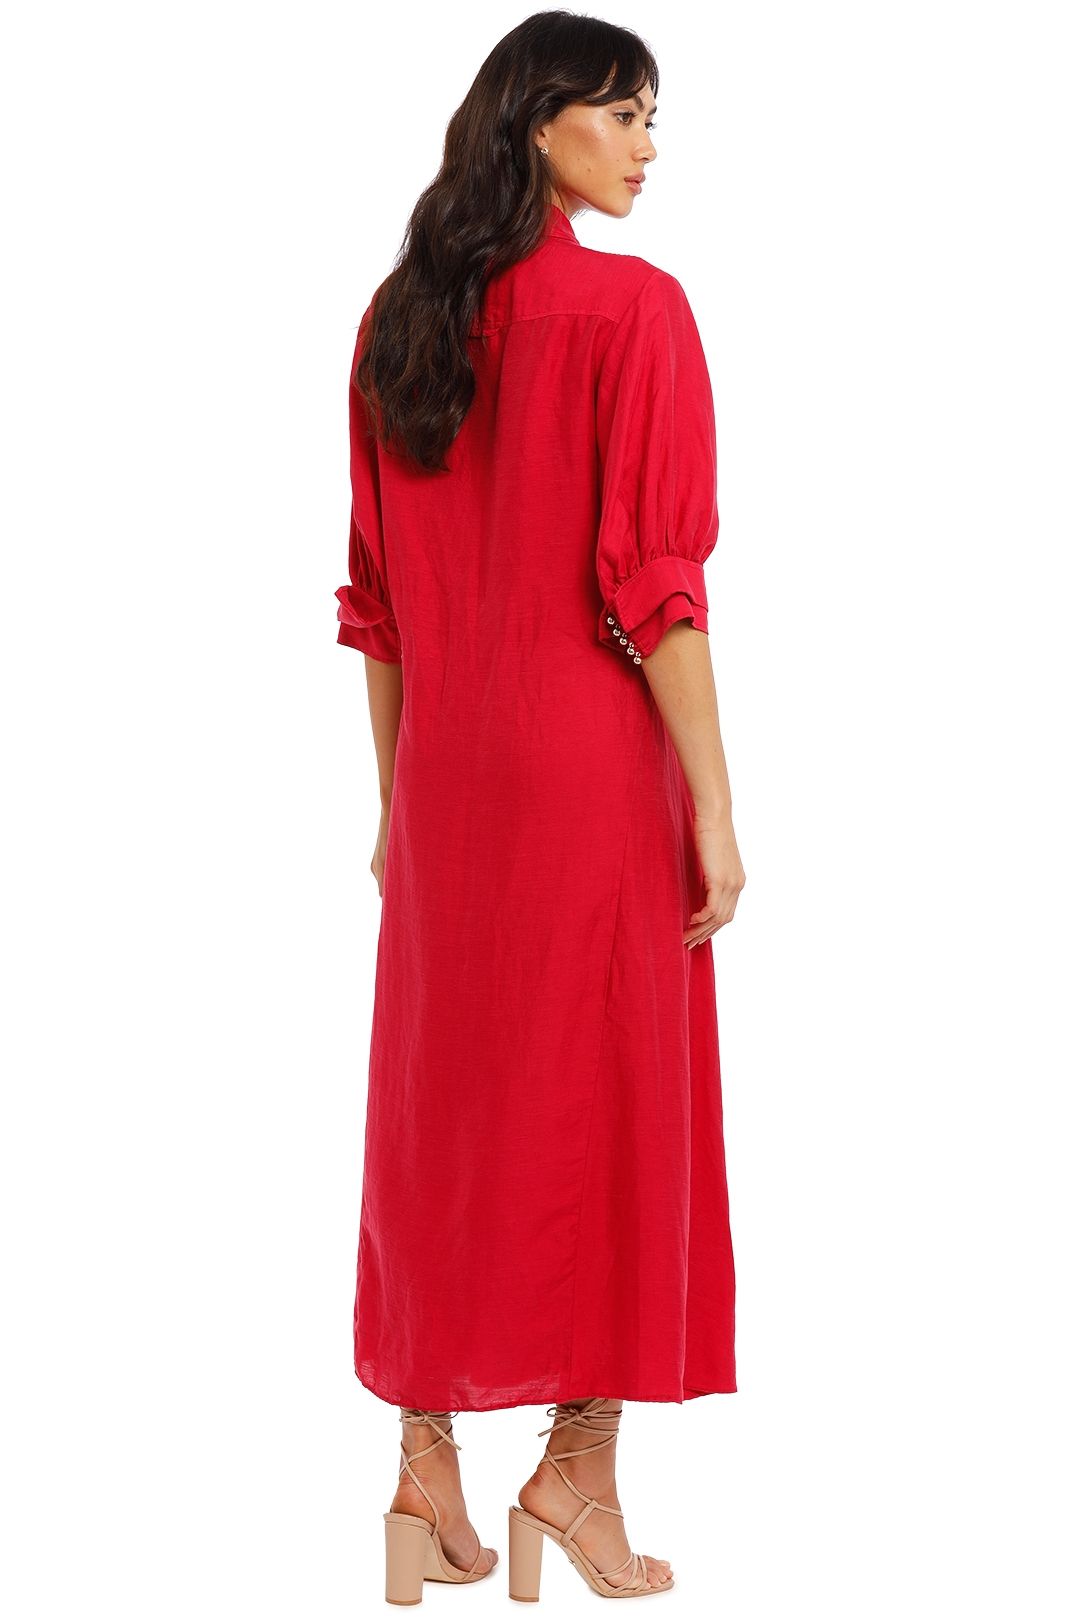 Acler Corte Dress Berry Short Sleeve